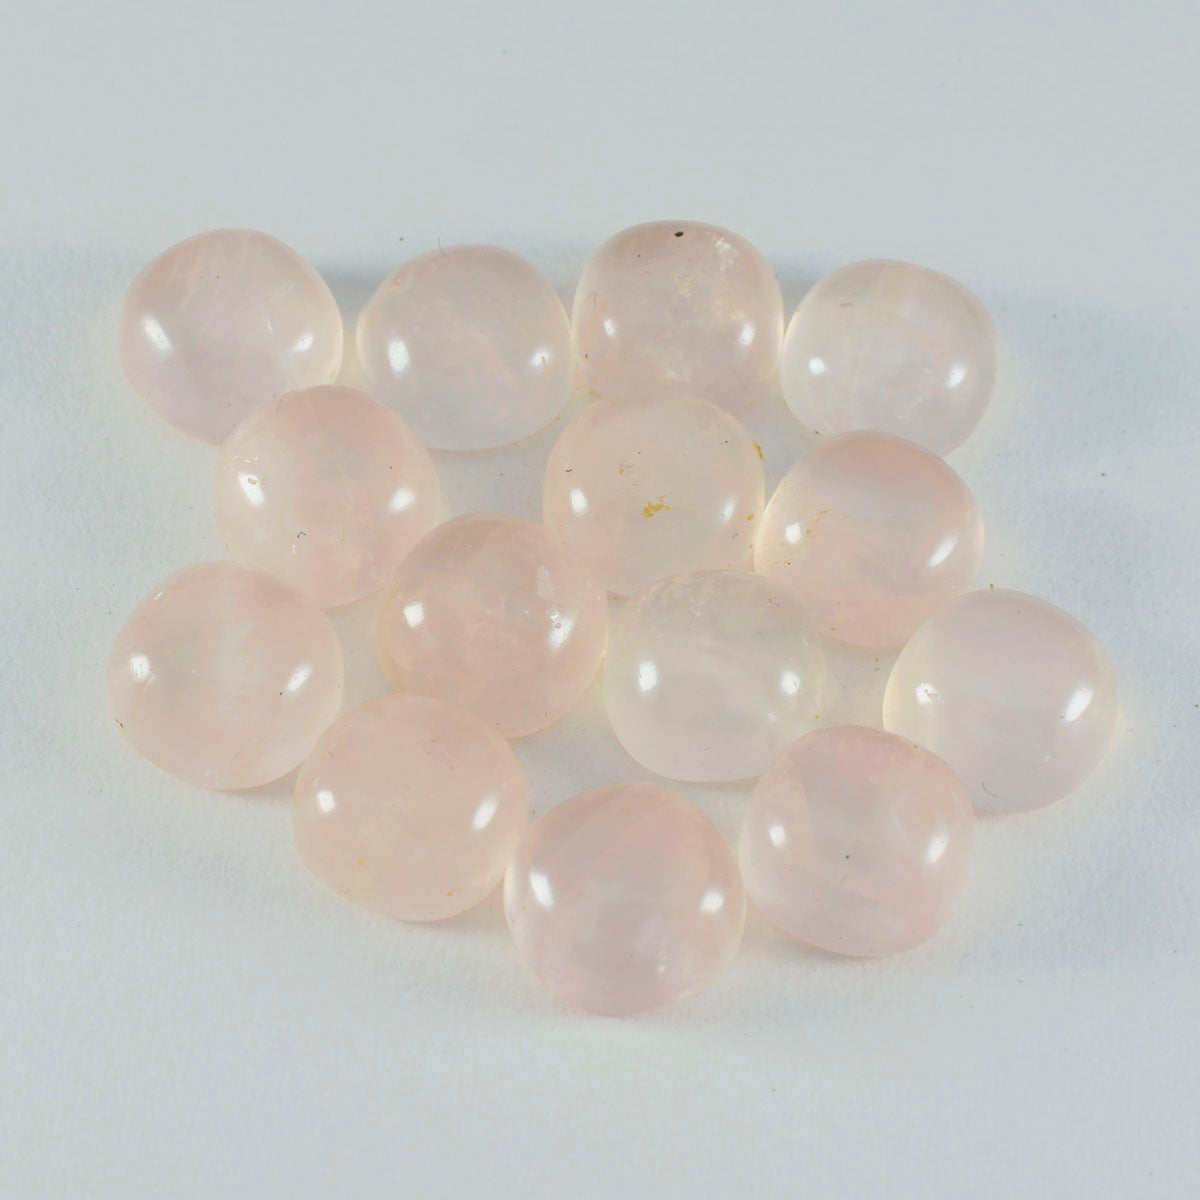 Riyogems 1PC Pink Rose Quartz Cabochon 10x10 mm Cushion Shape beautiful Quality Loose Stone